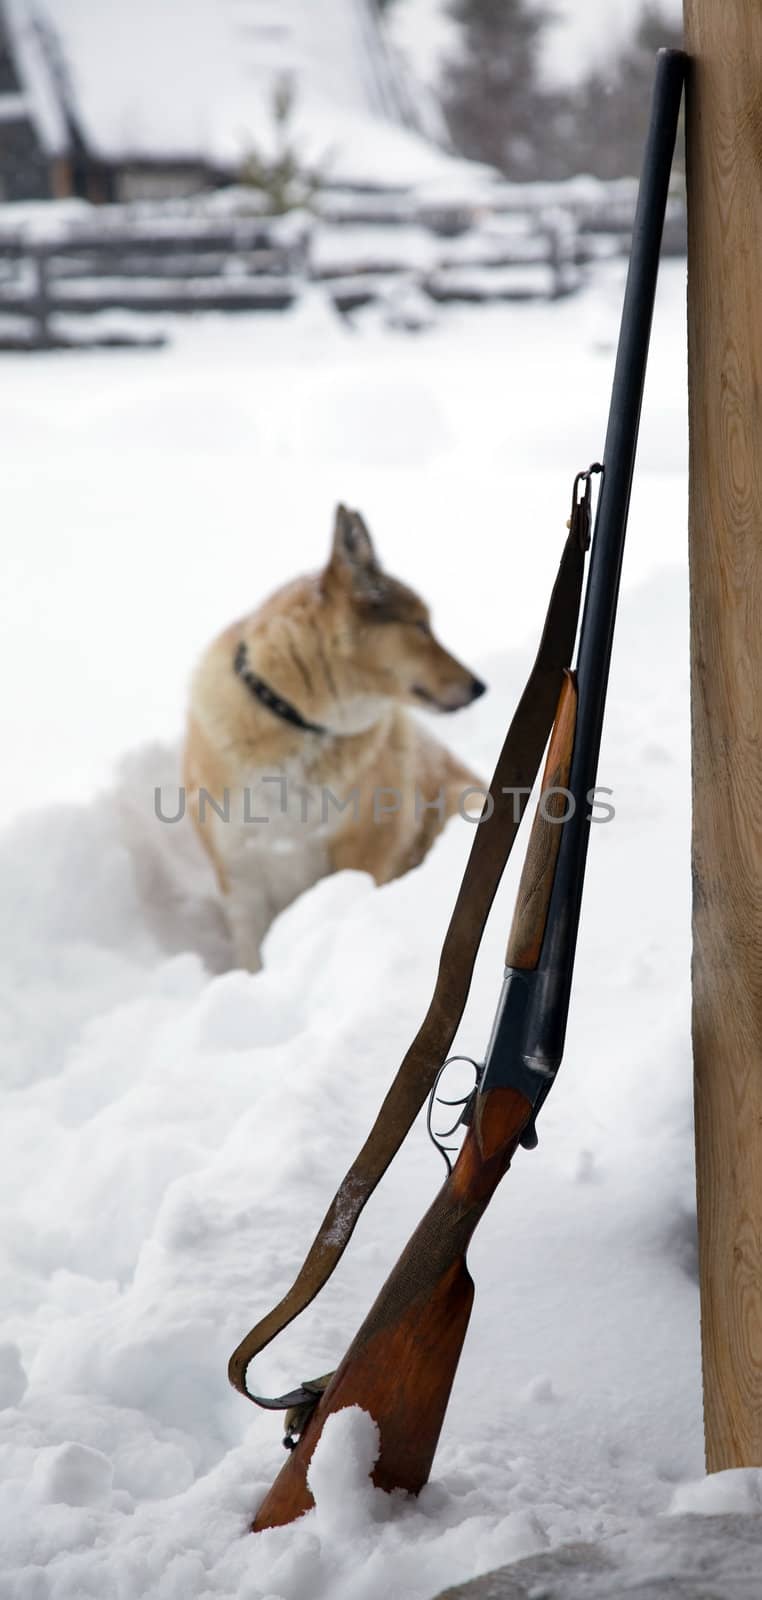 The dog next to a shotgun by AleksandrN